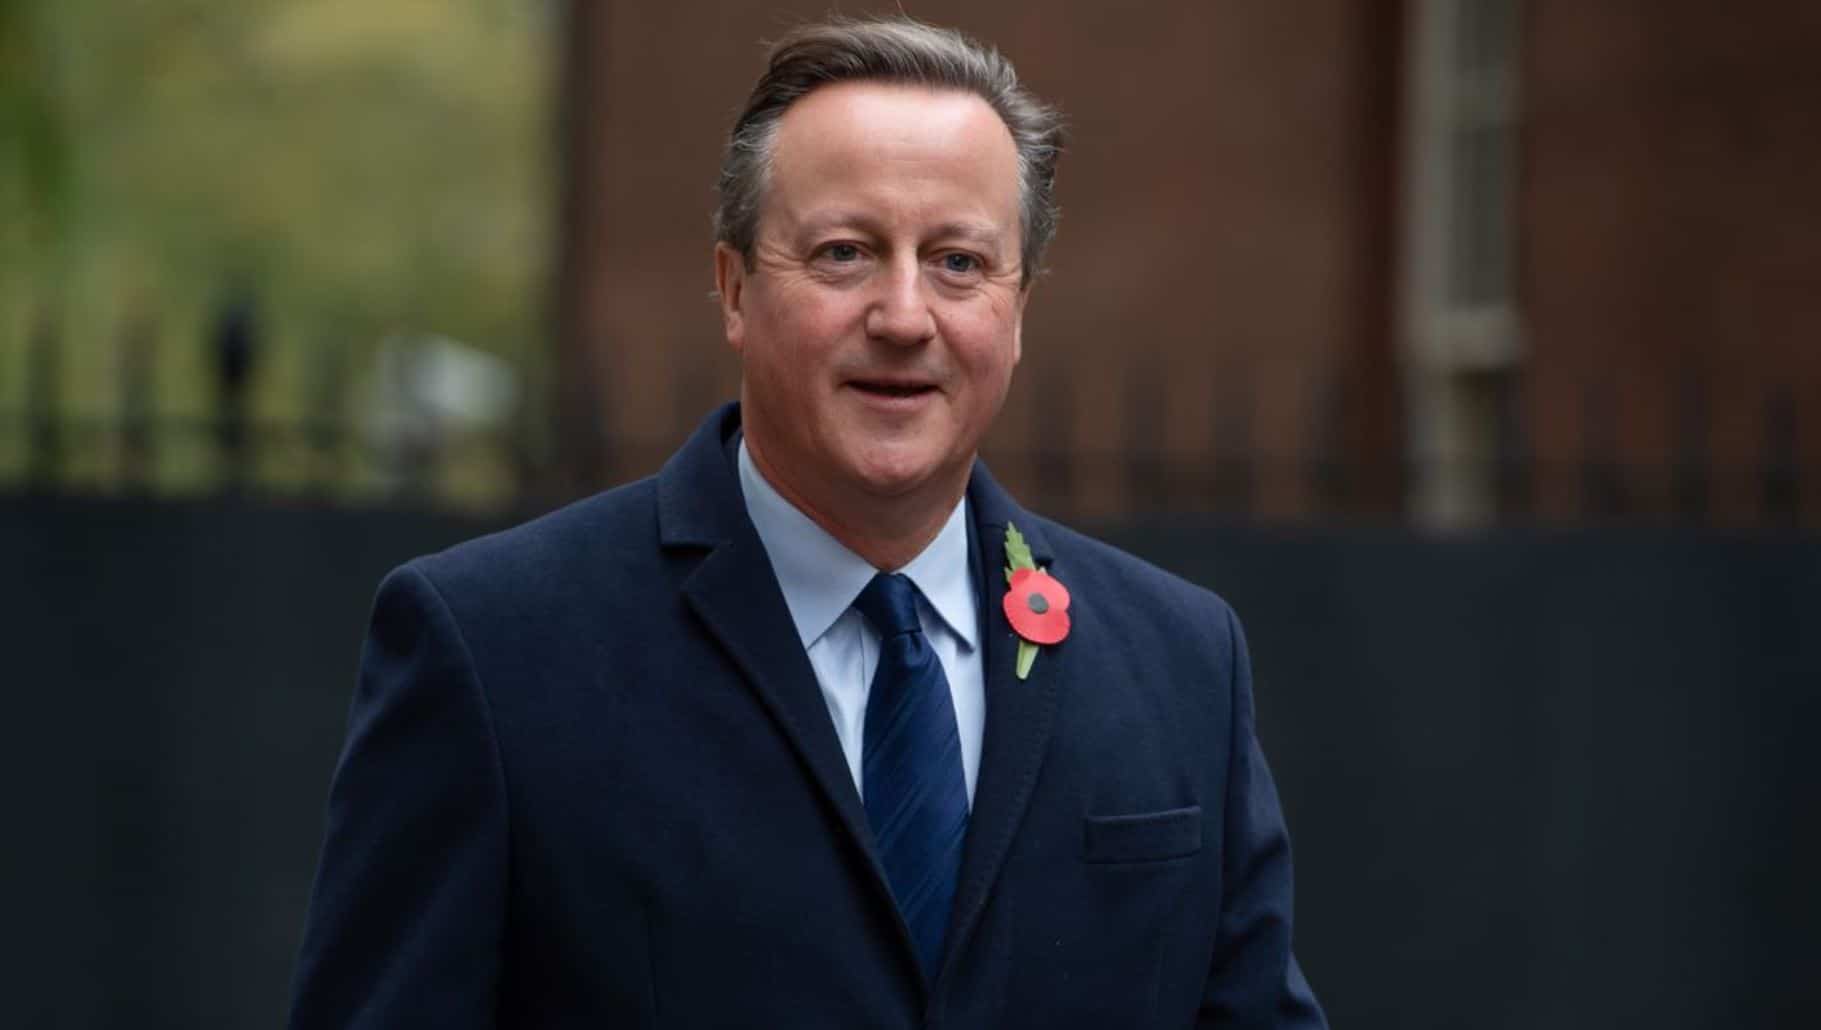 David Cameron to be new foreign secretary